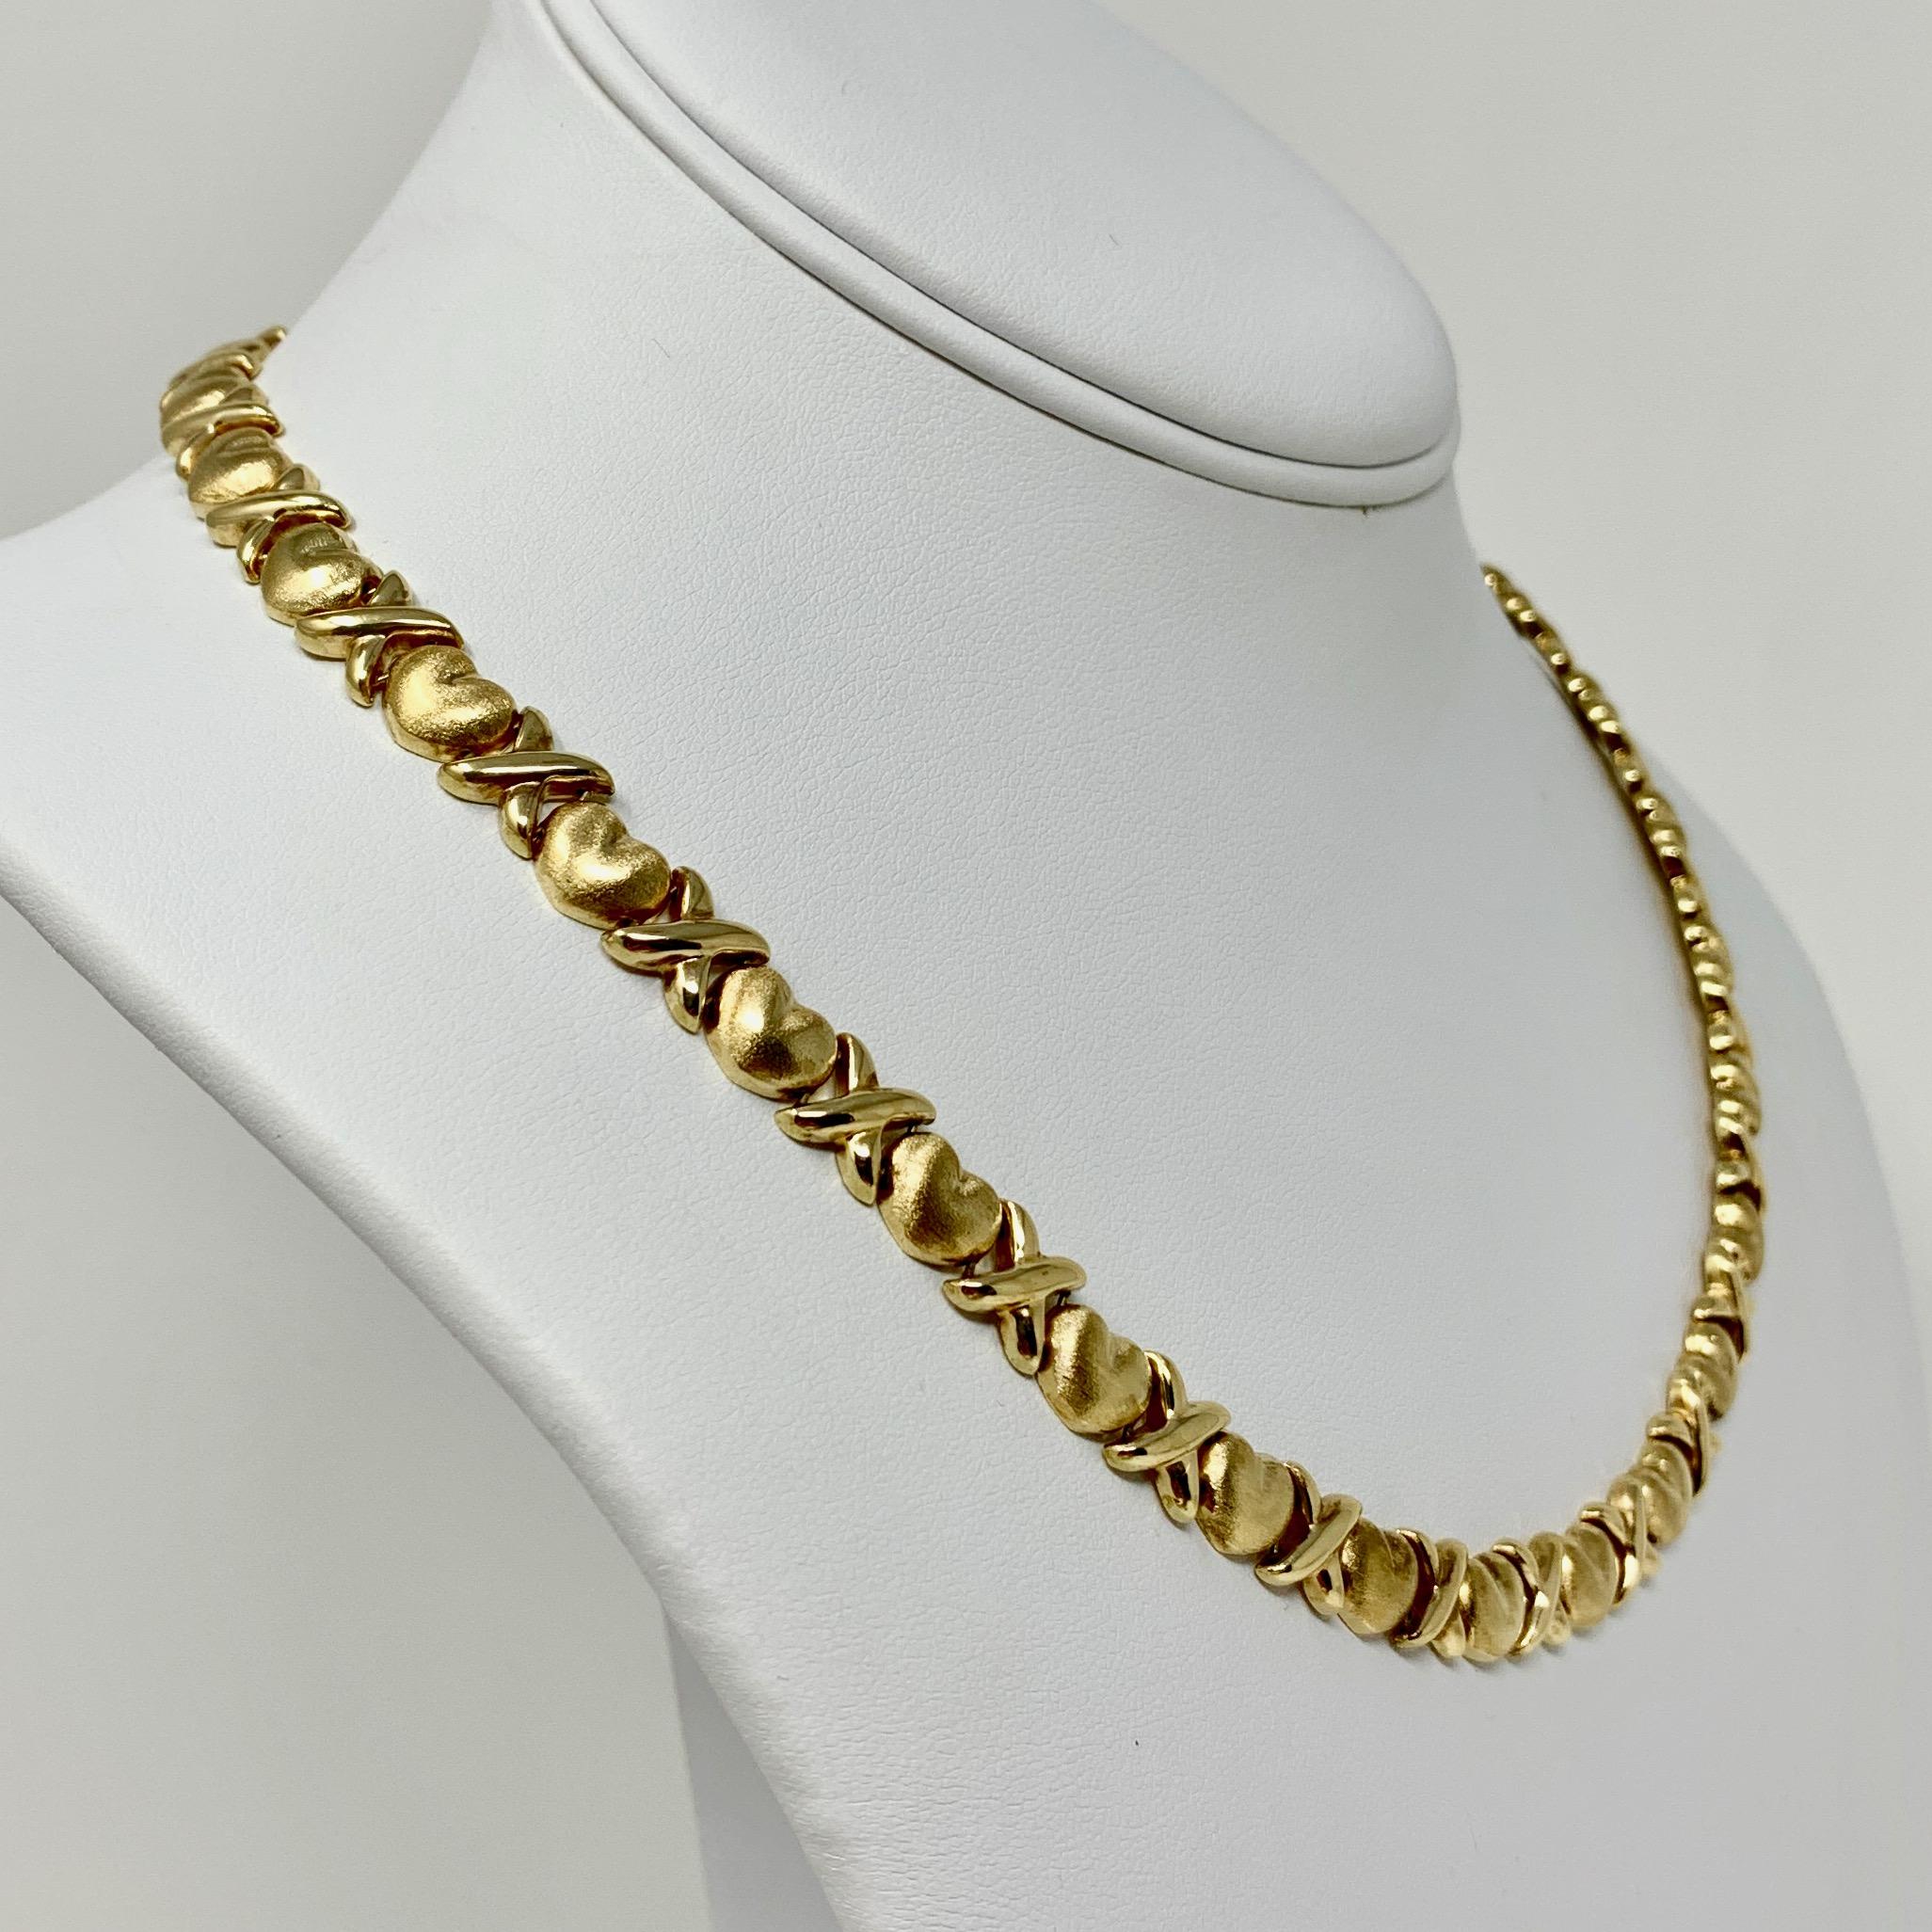 Aurelia Xo Hugs Kisses Charm Necklace in 9ct Rose Gold — The Jewel Shop